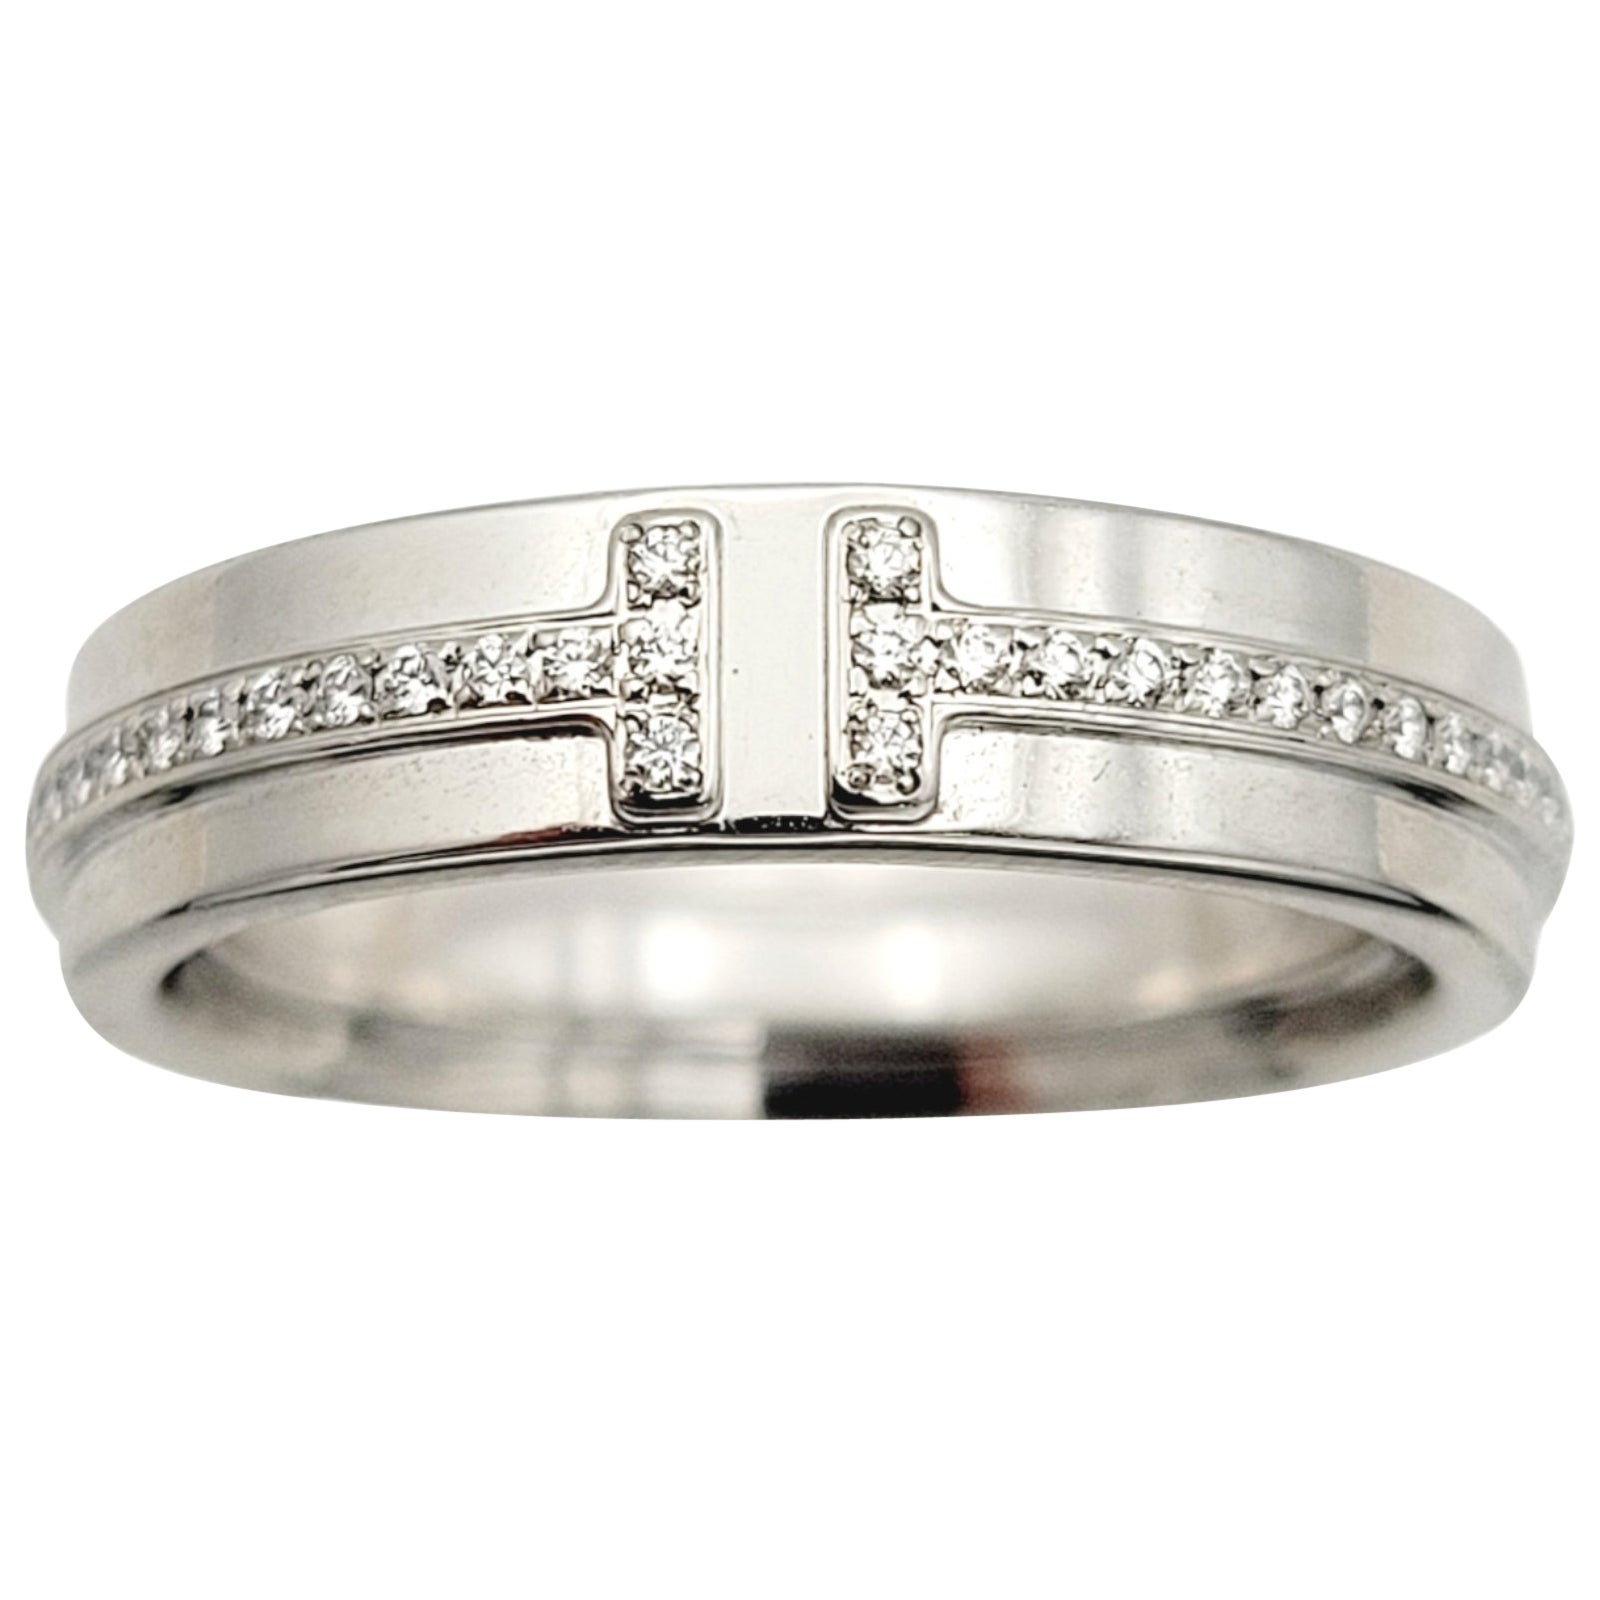 Tiffany & Co. Tiffany T Collection Narrow Diamond Ring in 18 Karat White Gold